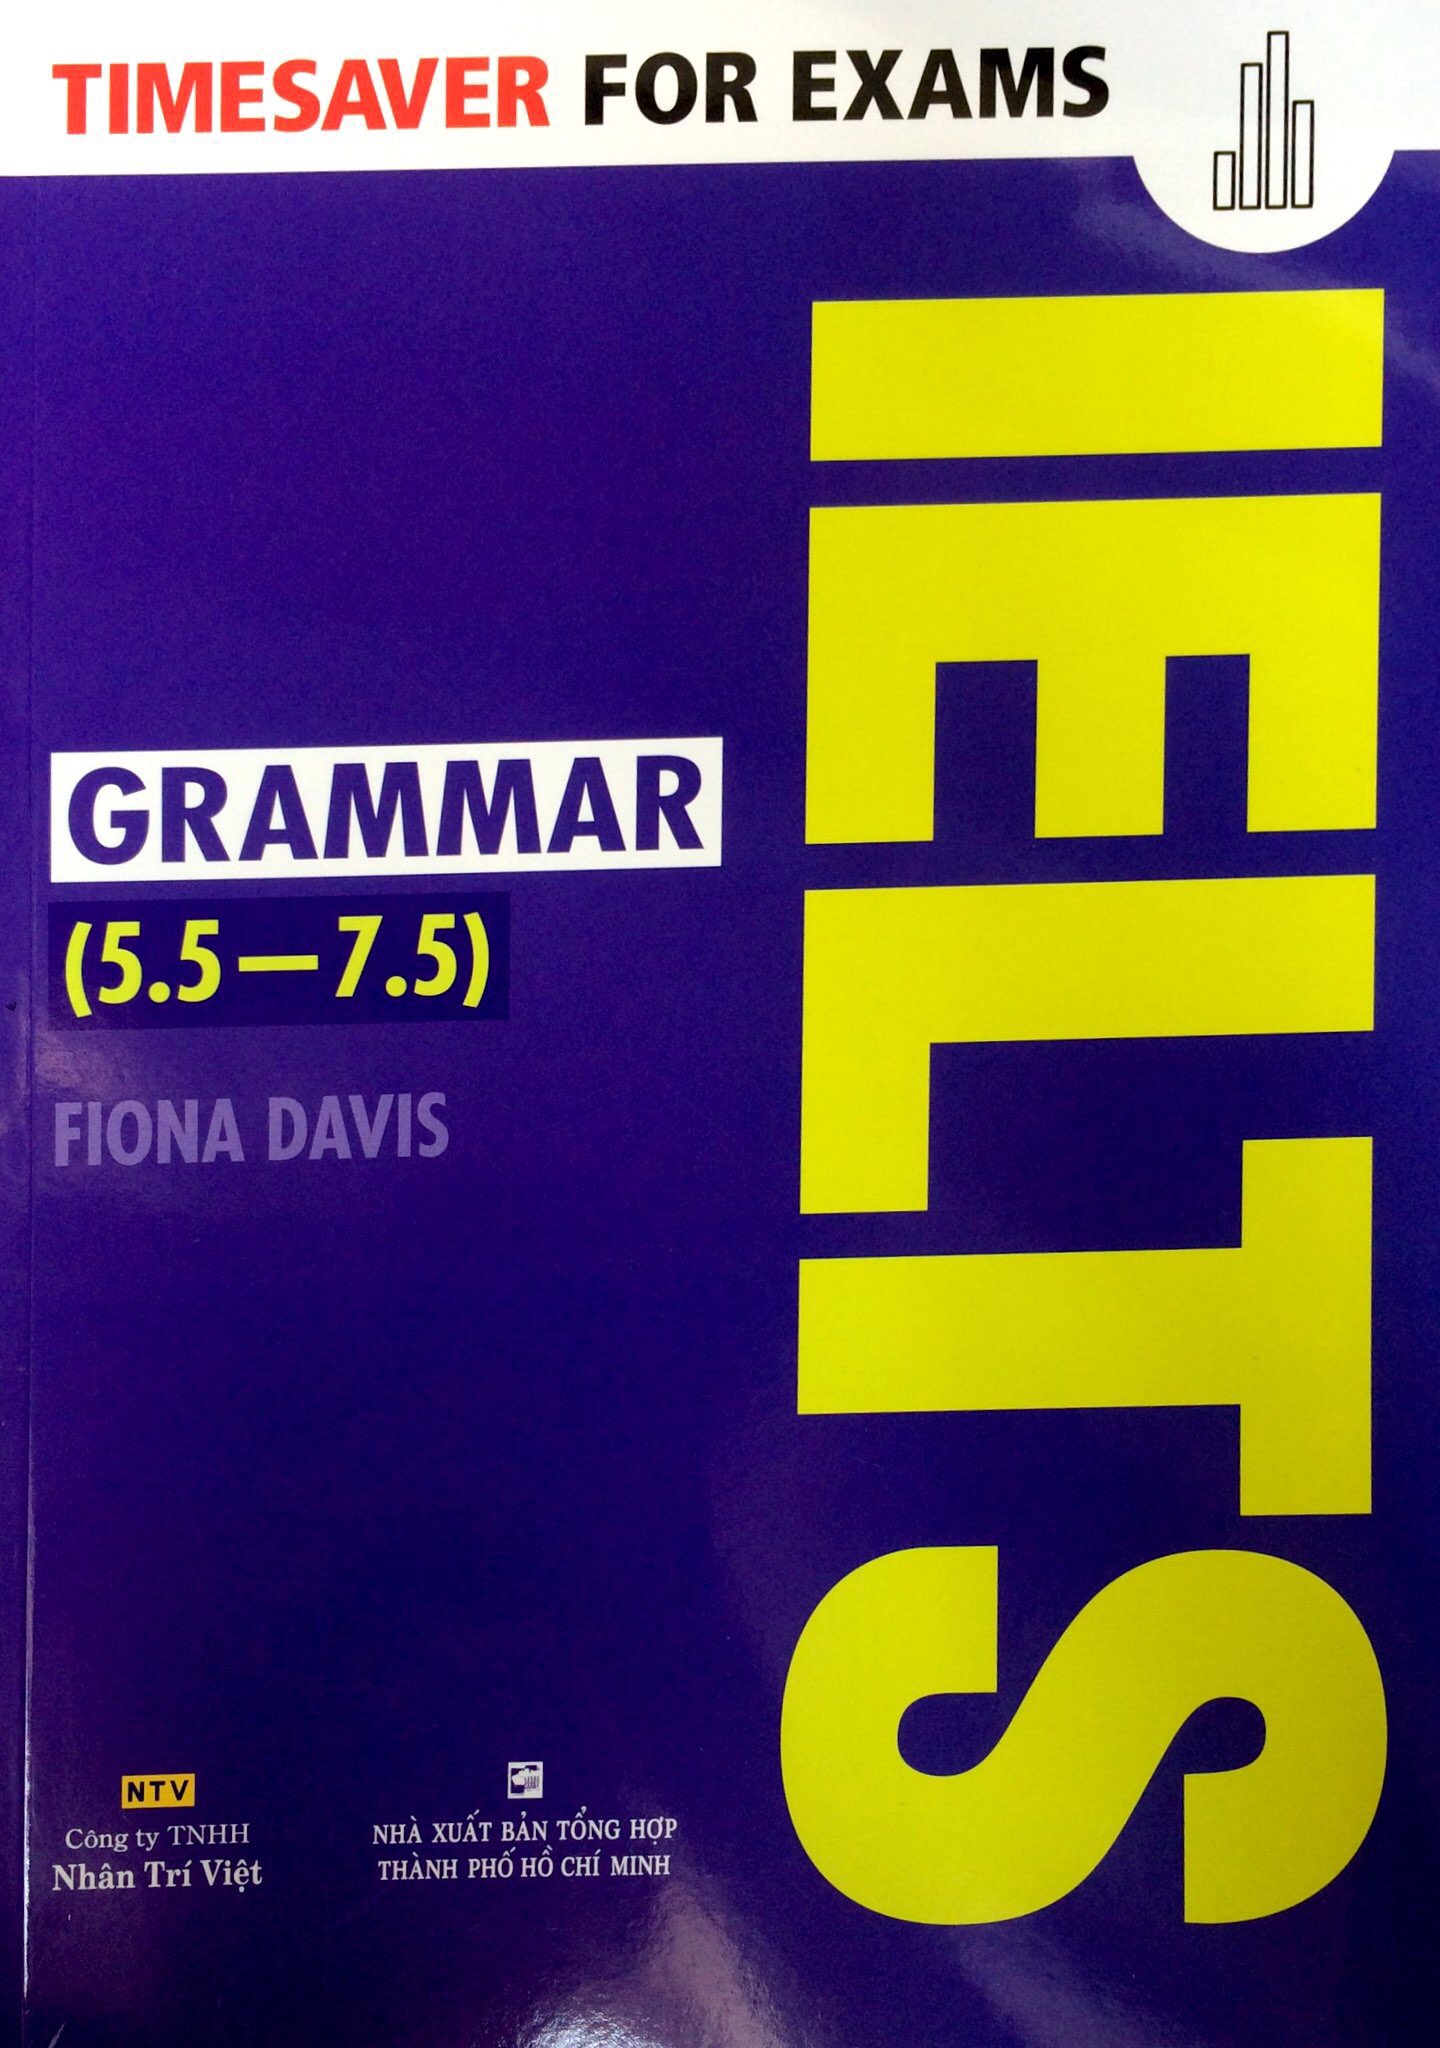 Timesaver for Exams - IELTS Grammar 5.5 - 7.5 PDF